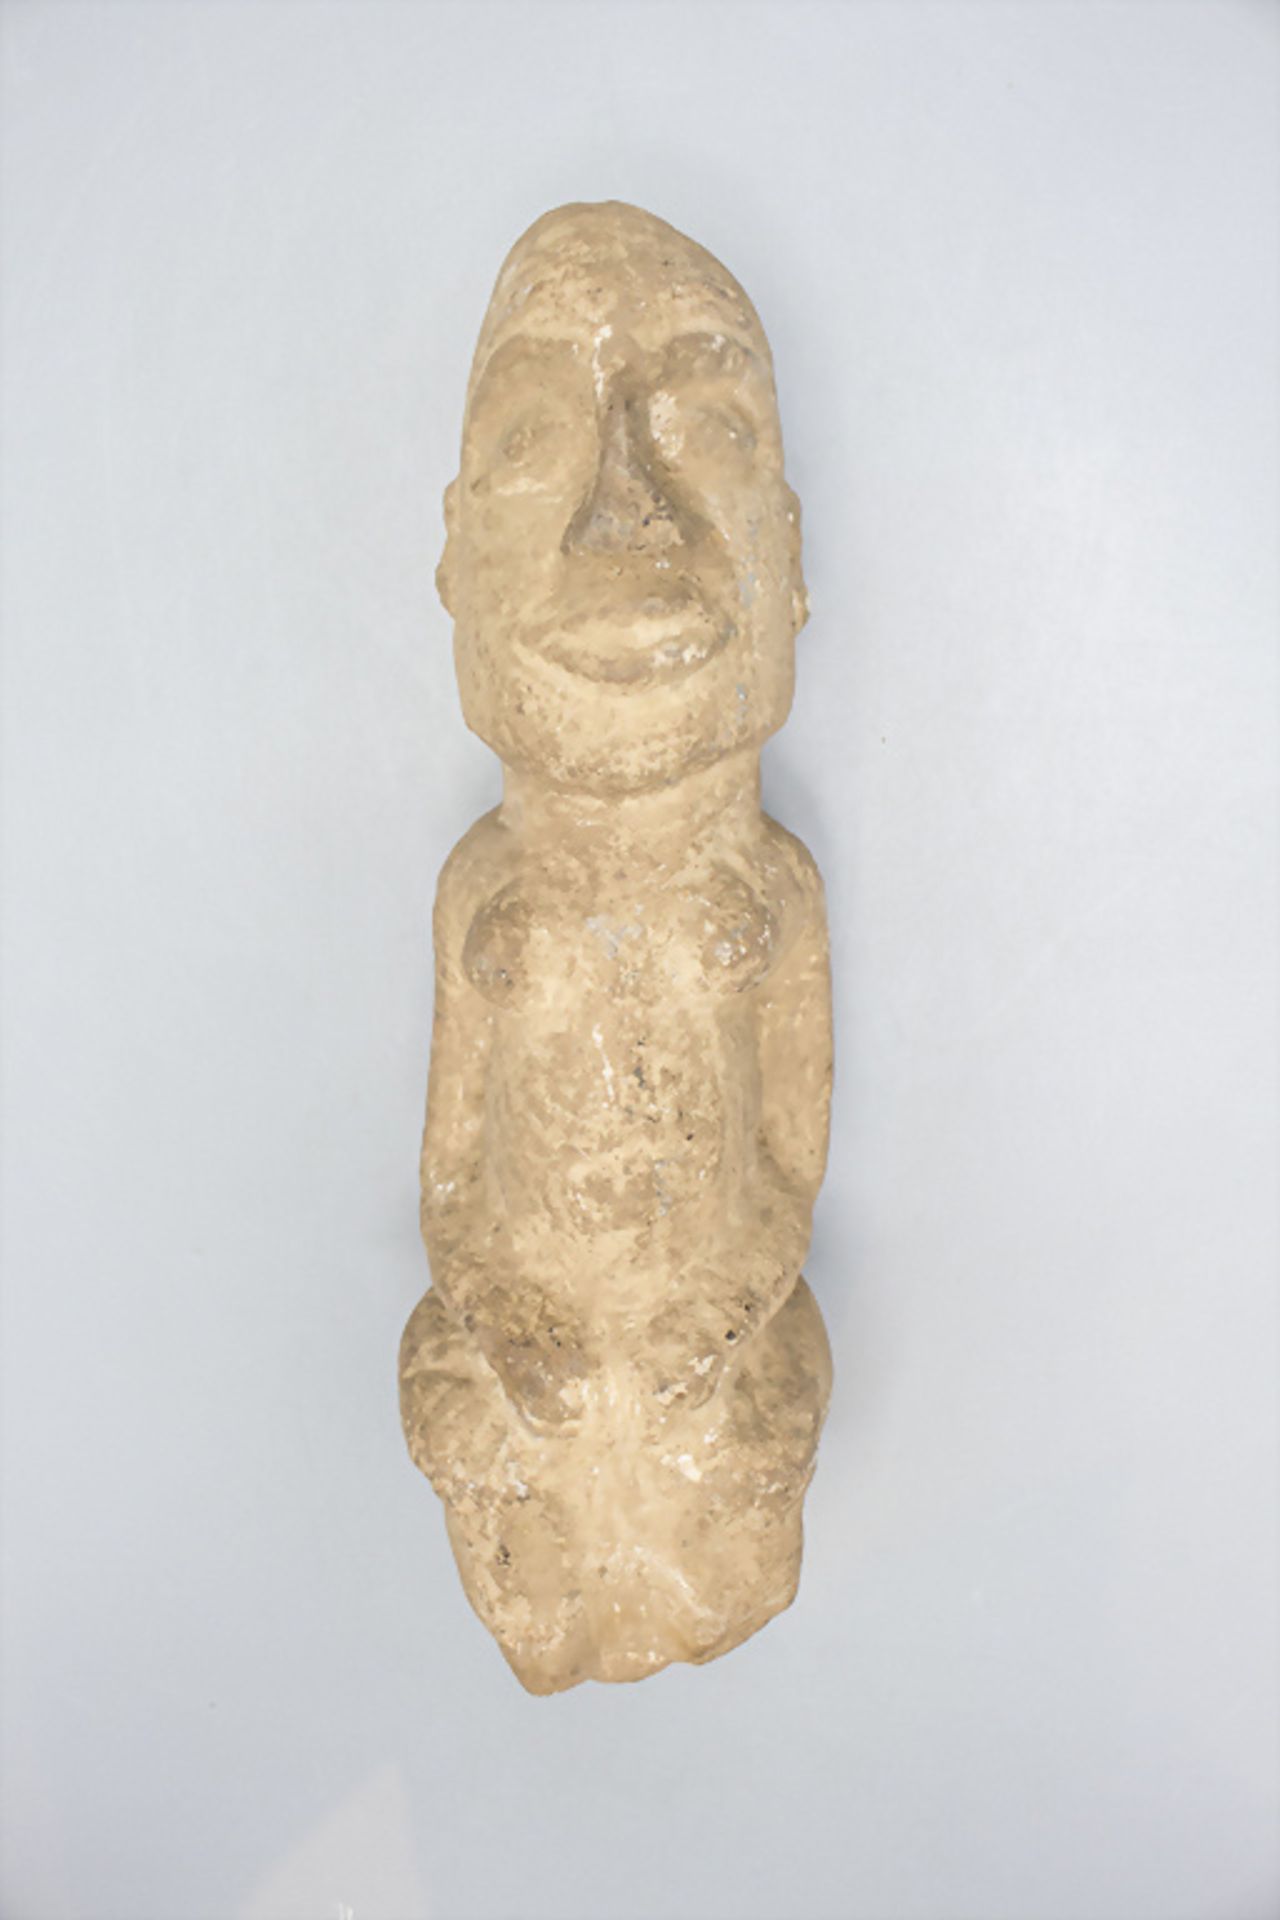 Ahnenfigur/ An ancestor figure, Dogon, Mali